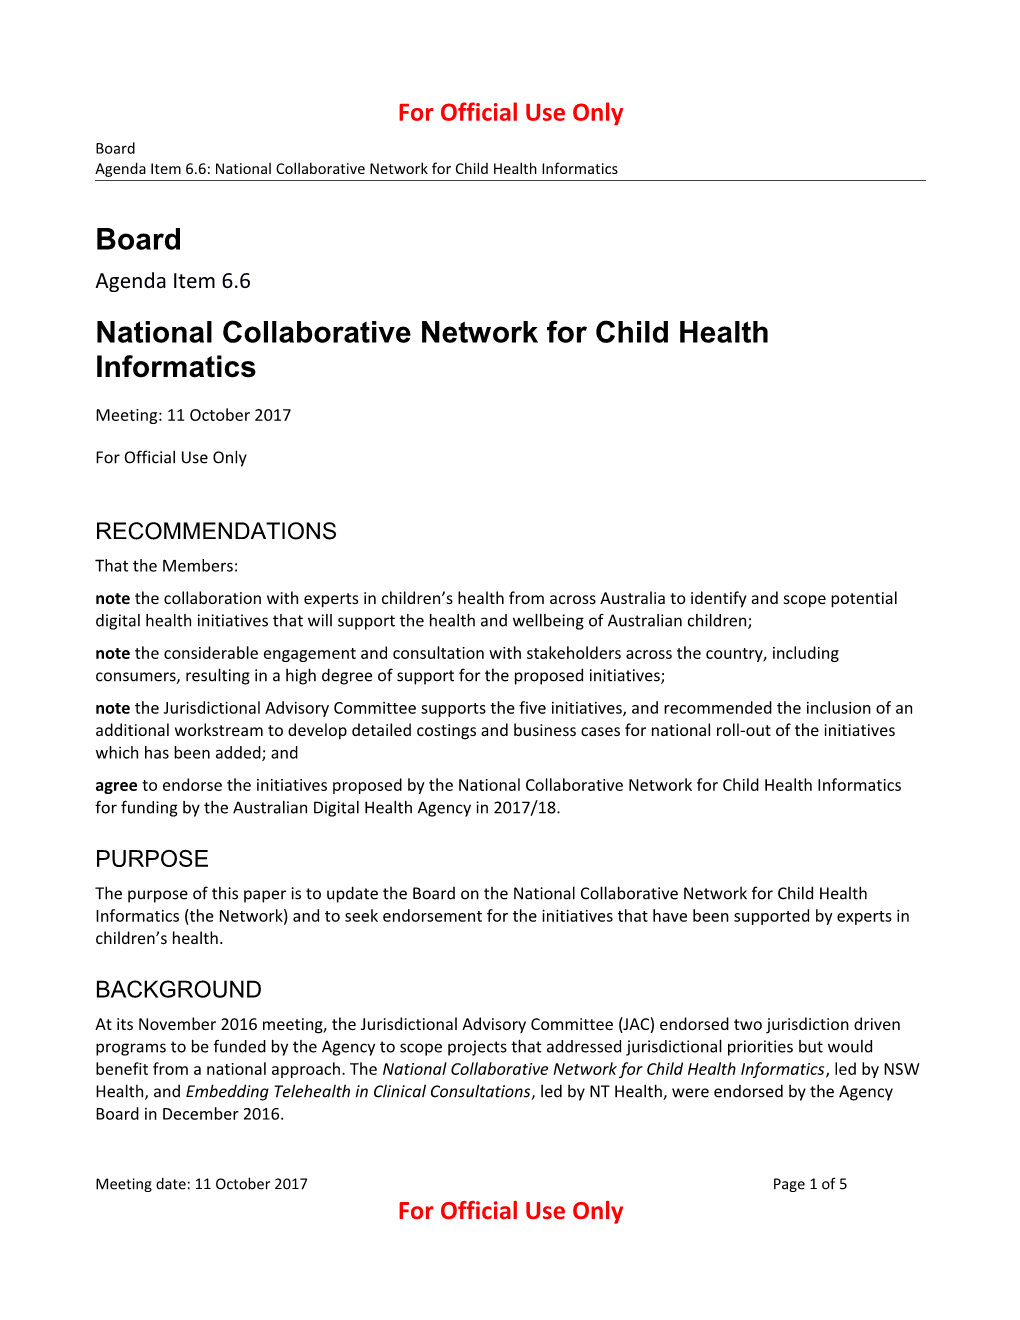 National Collaborative Network for Child Health Informatics